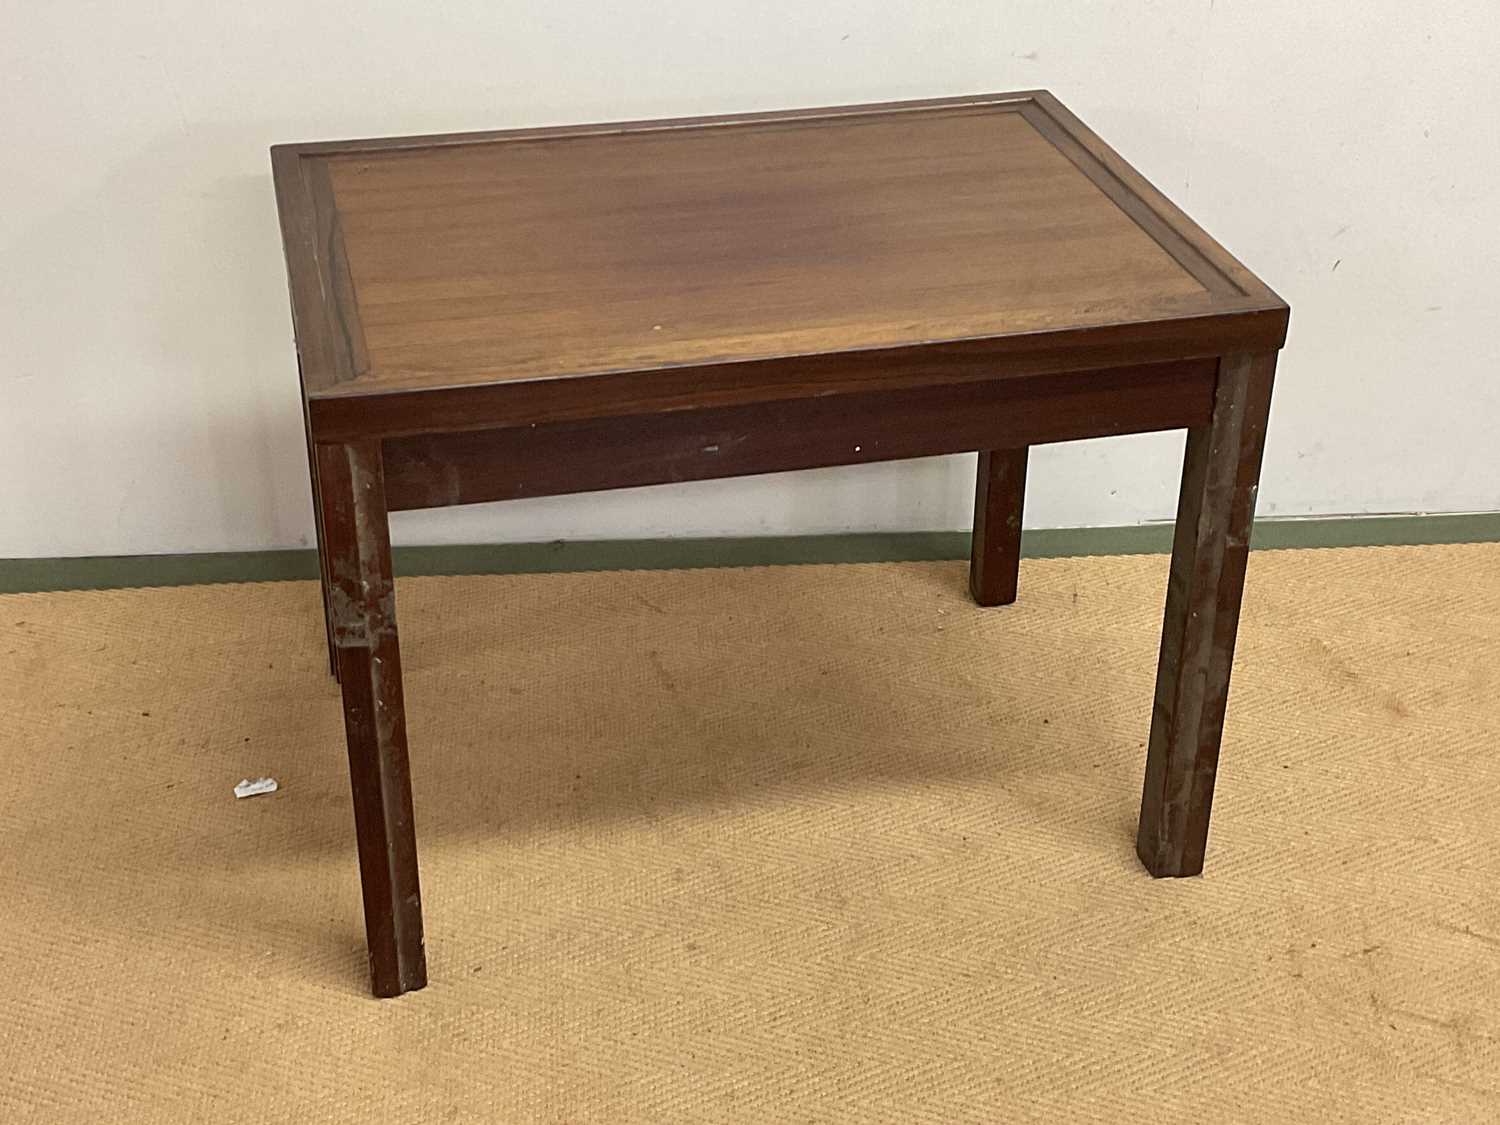 Mid 20th century Swedish rosewood side table, height 53cm, width 69cm, depth 49cm.